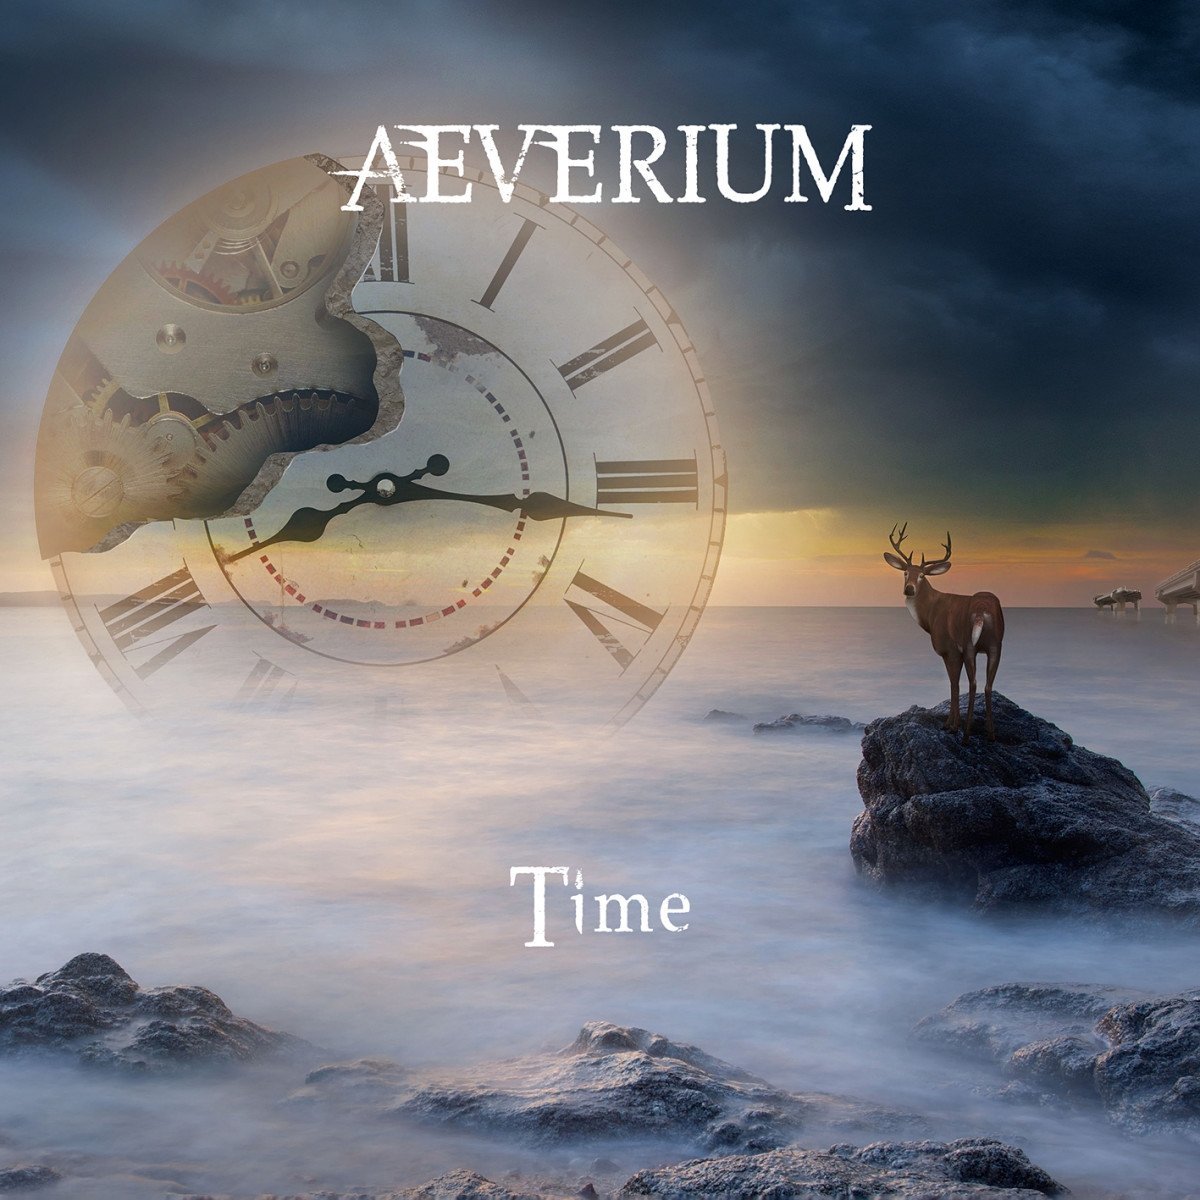 Aeverium – Tour 2017 als Support von Lord of the Lost